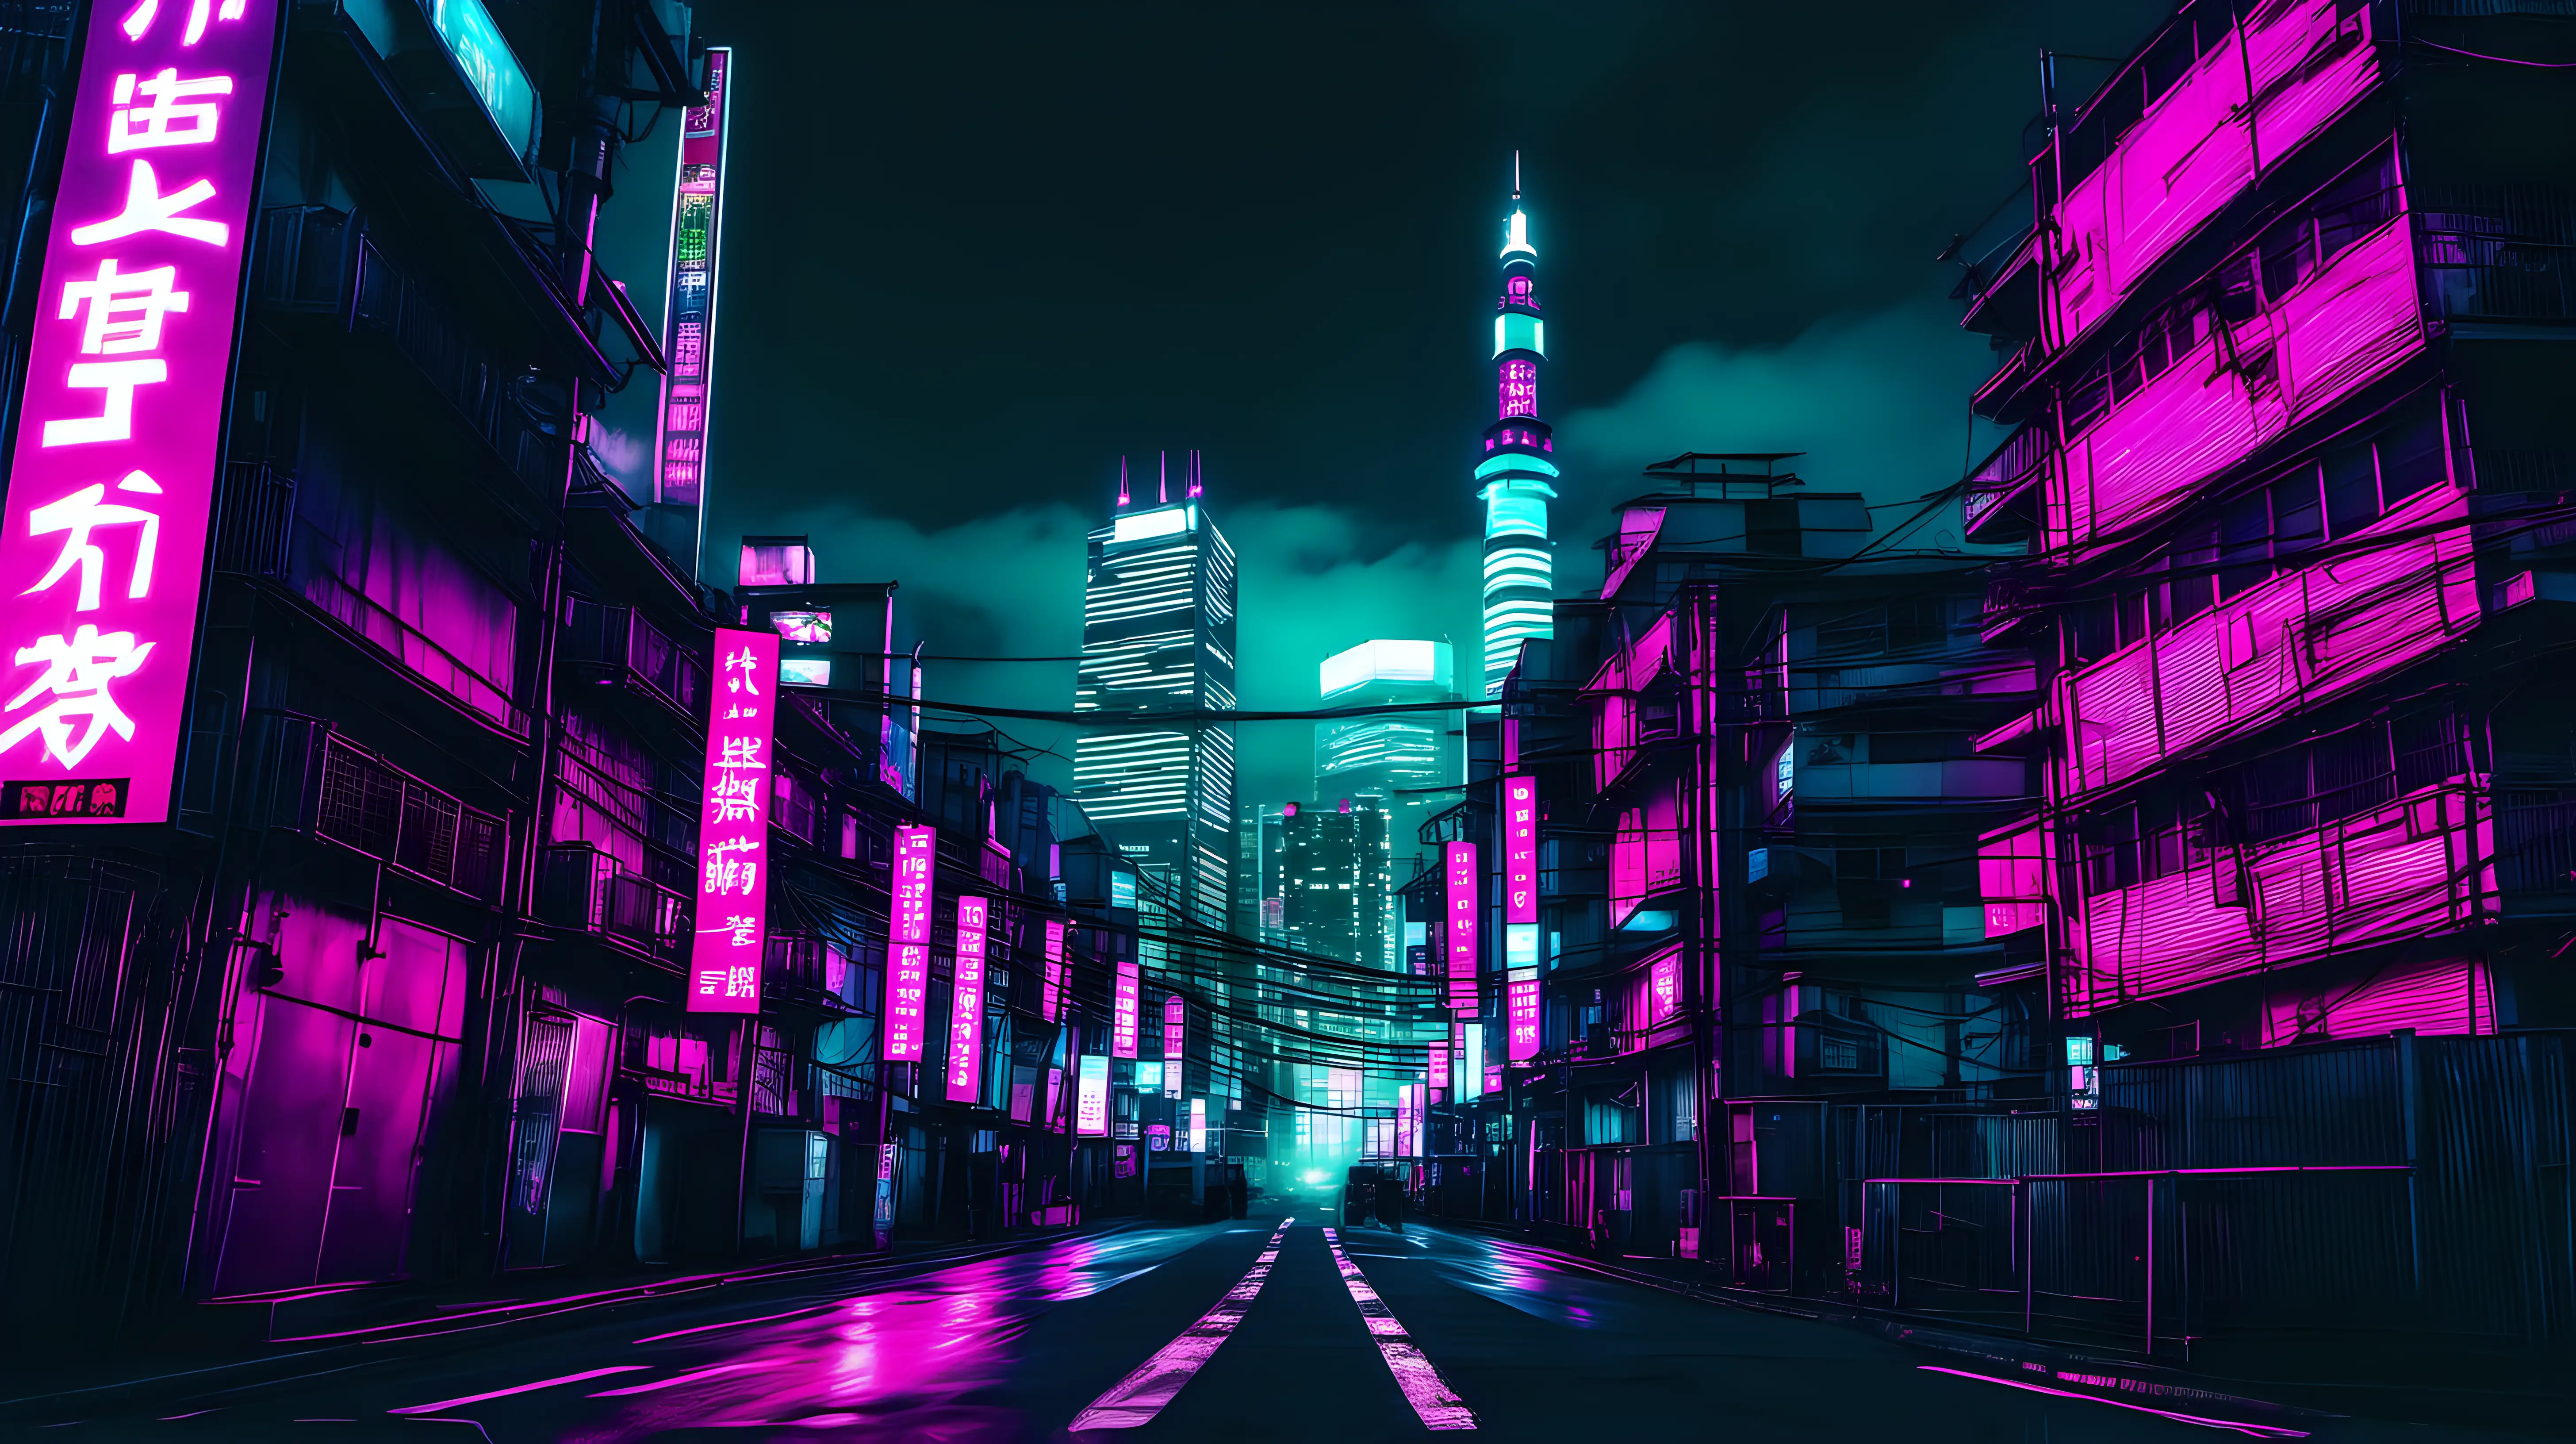 Nocturnal Cyberpunk Cityscape in Tokyo Dark Moody Night with Cyan and Fuchsia Lights